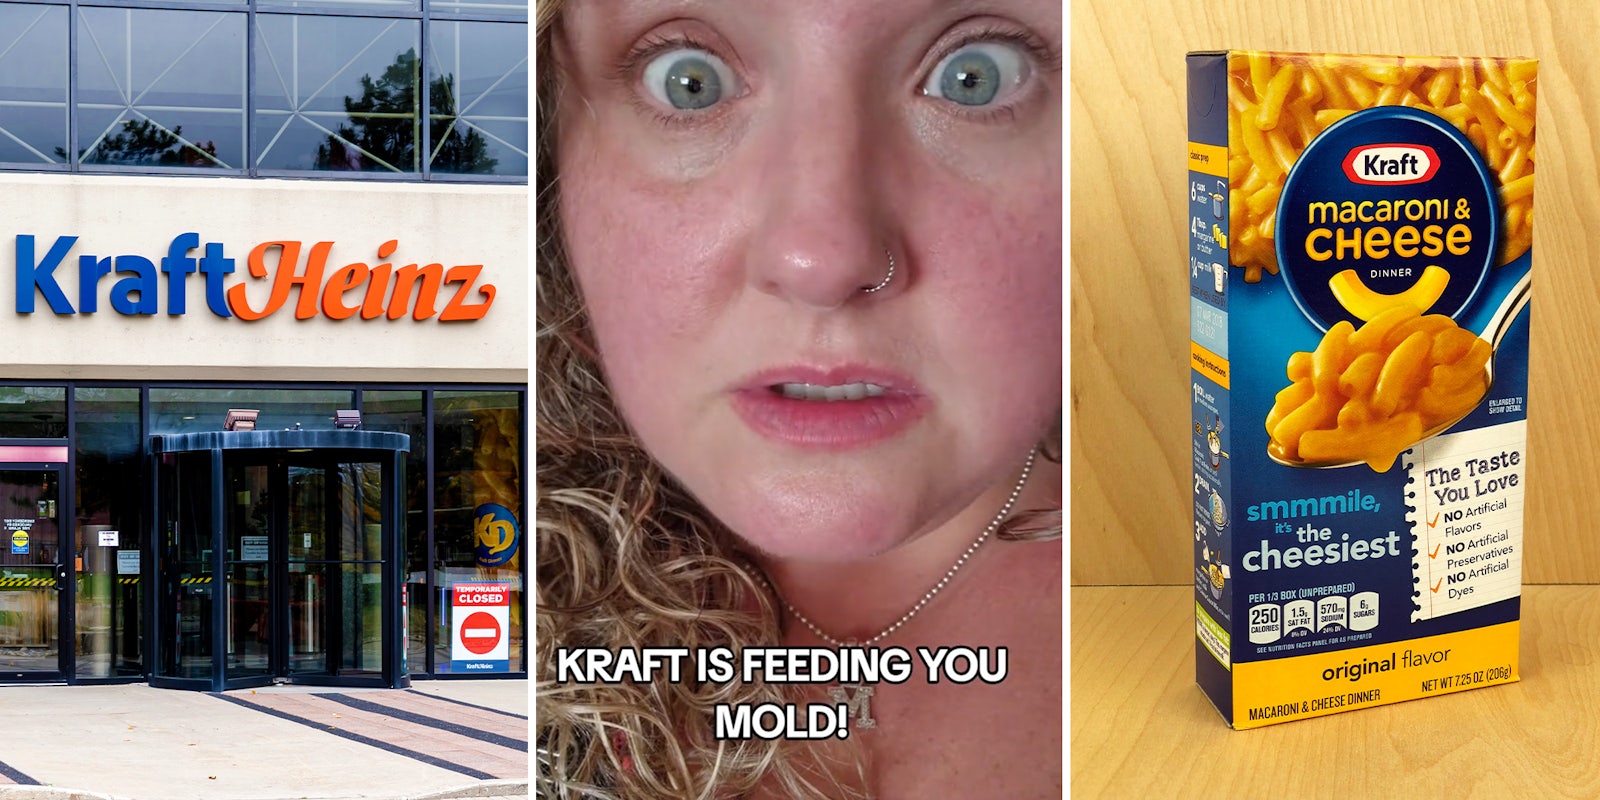 Woman says Kraft Mac & Cheese contains a surprising contaminant